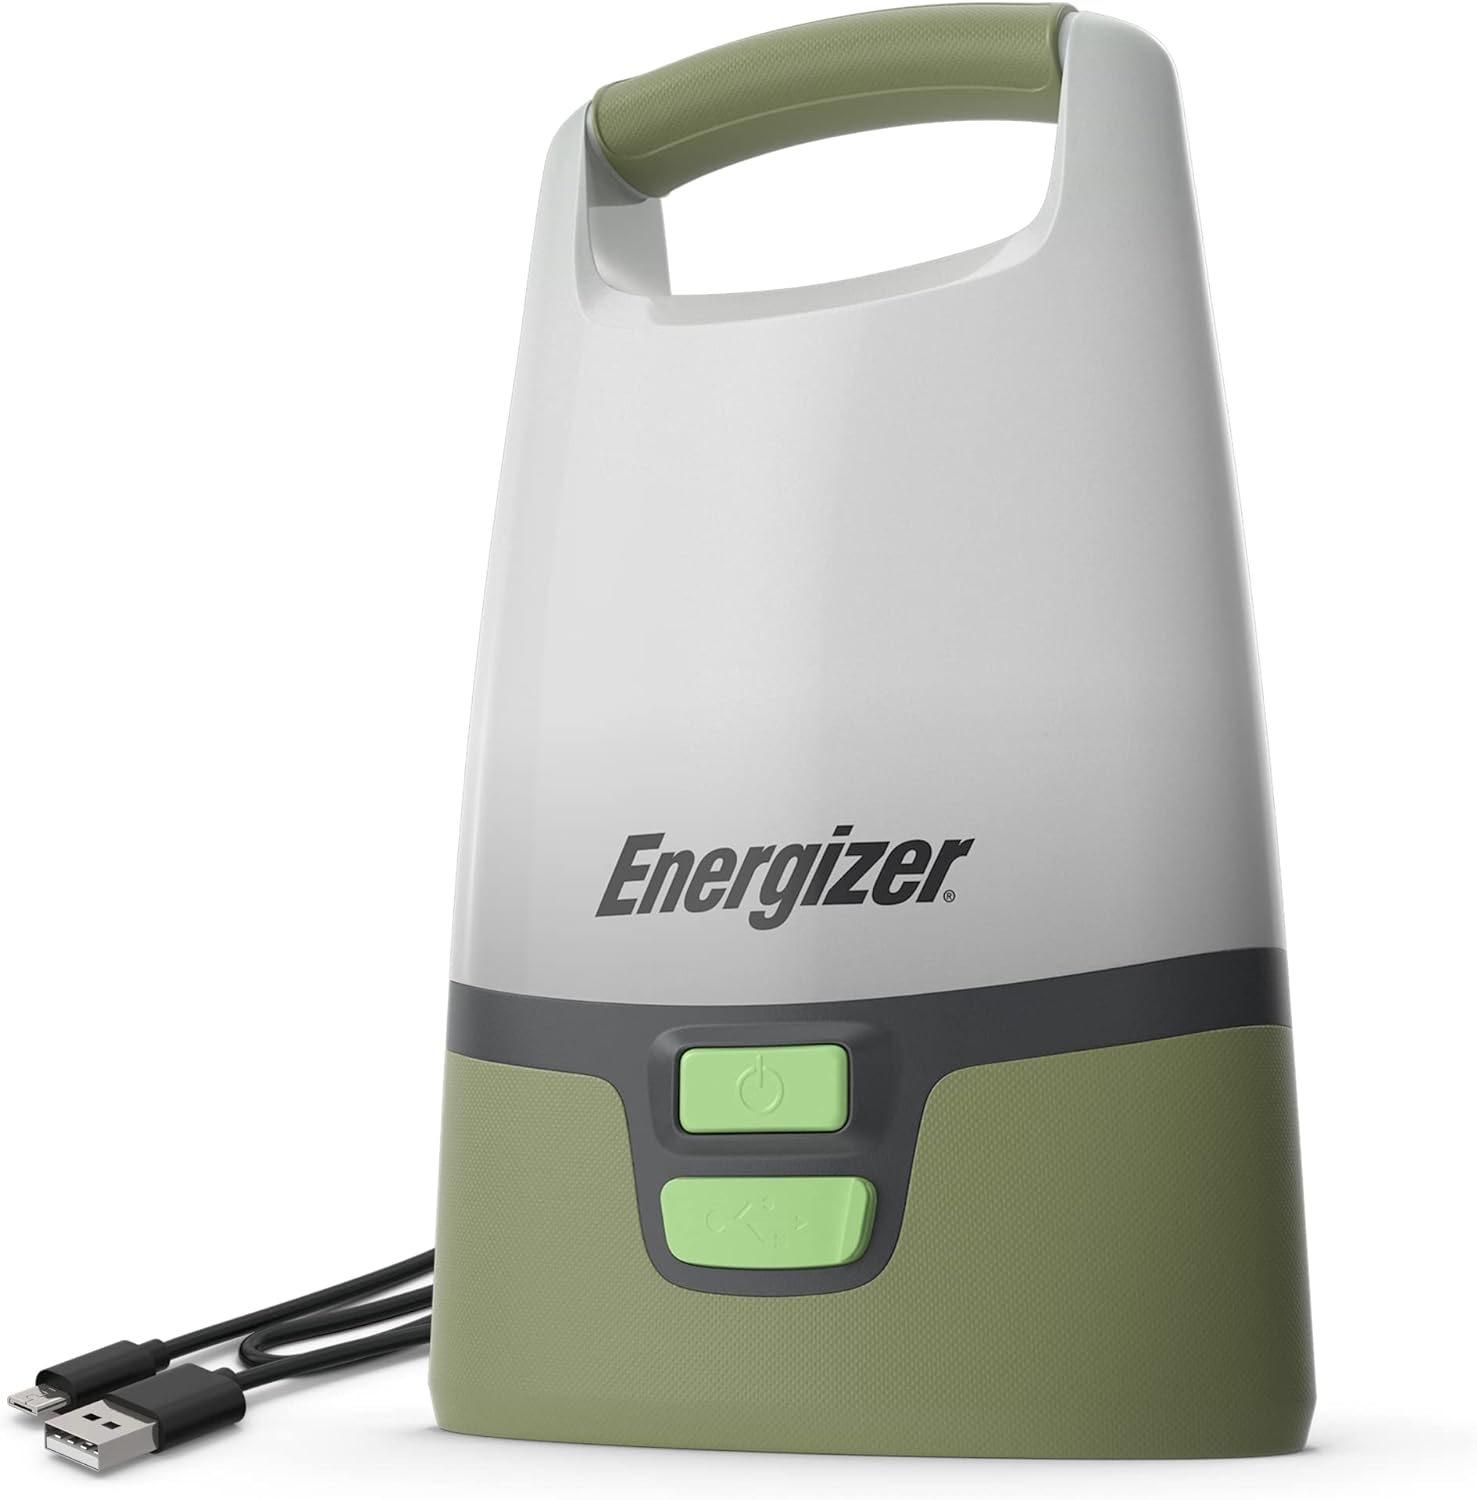 Energizer Vision LED Camping Lantern Review